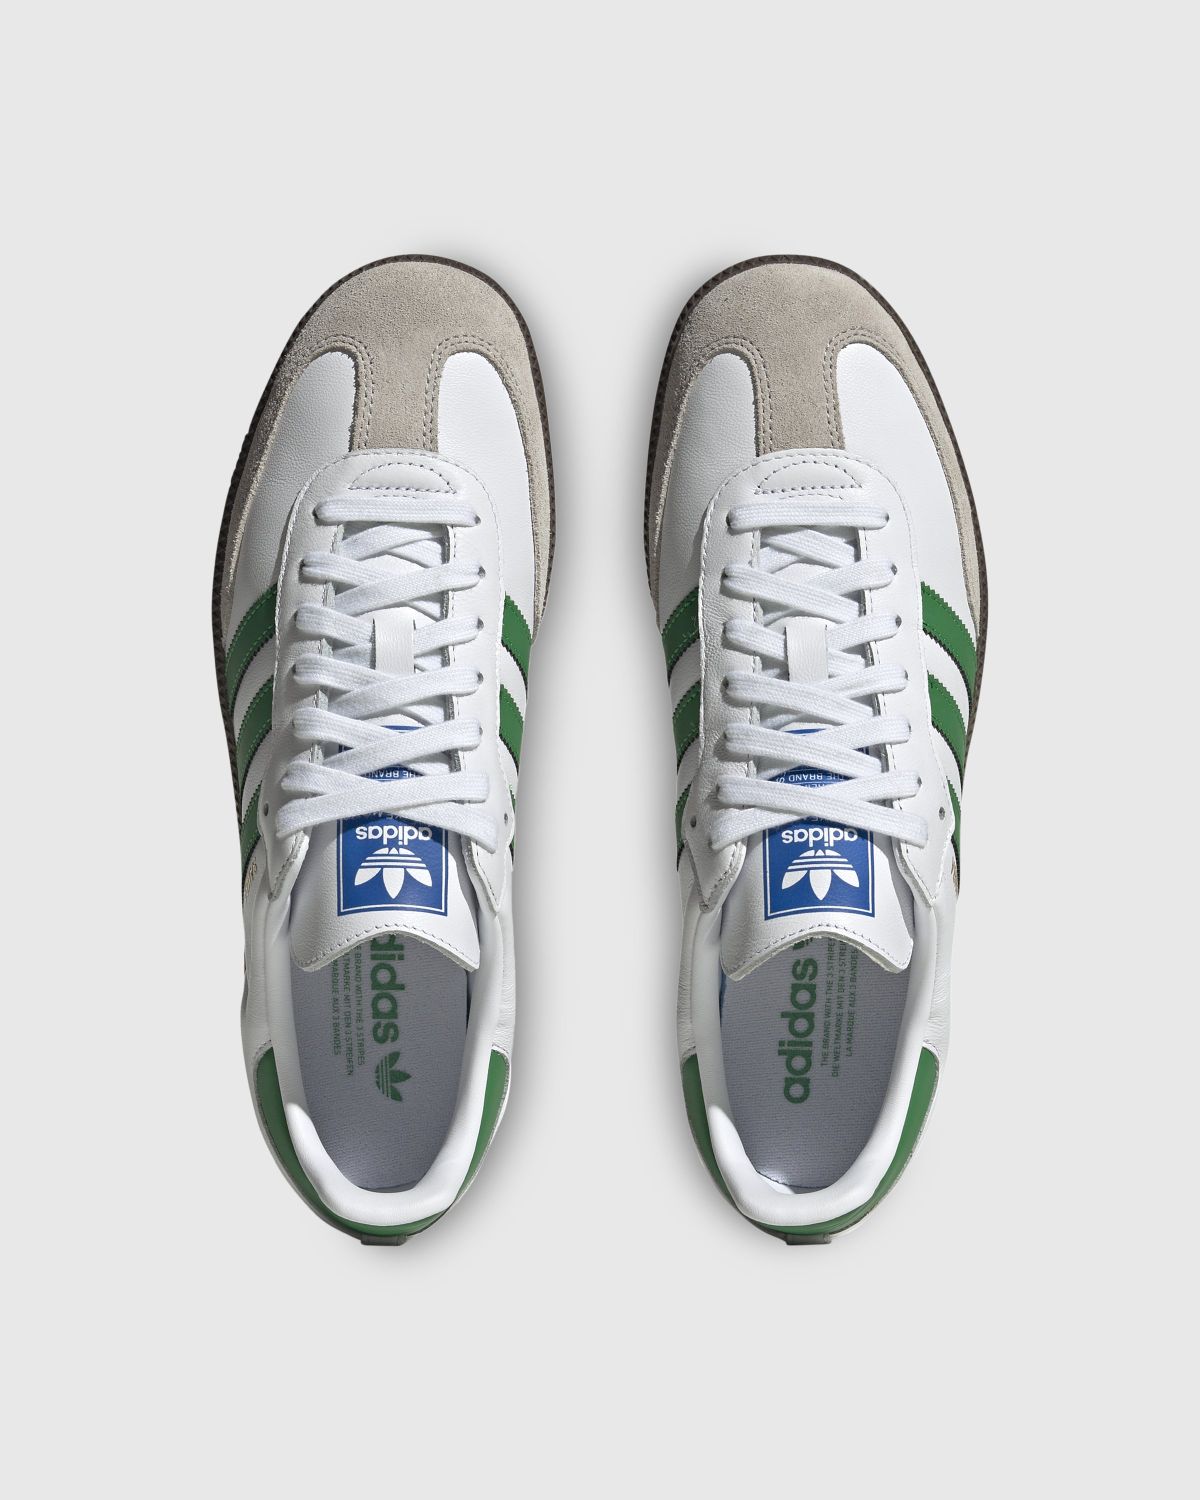 Adidas – Samba OG White/Green - Sneakers - White - Image 4